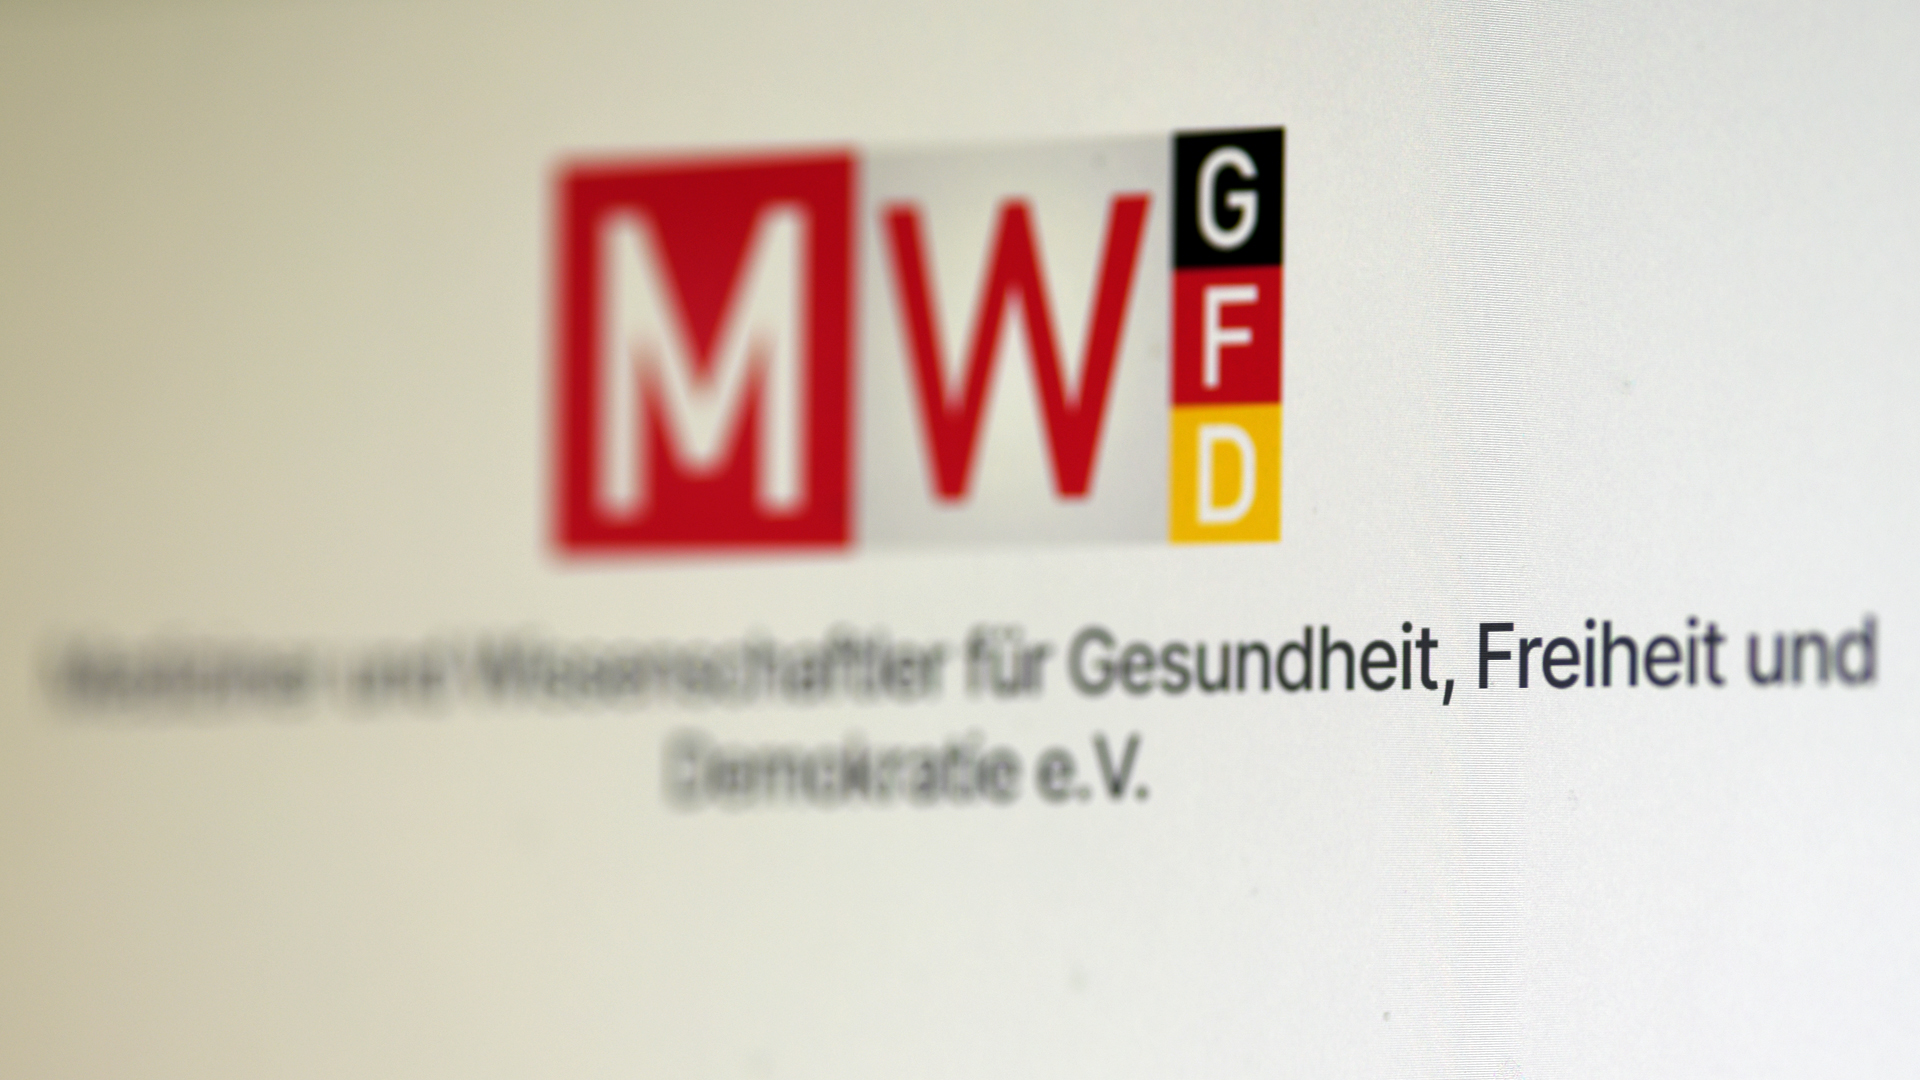 Website der MWGFD | Wulf Rohwedder 